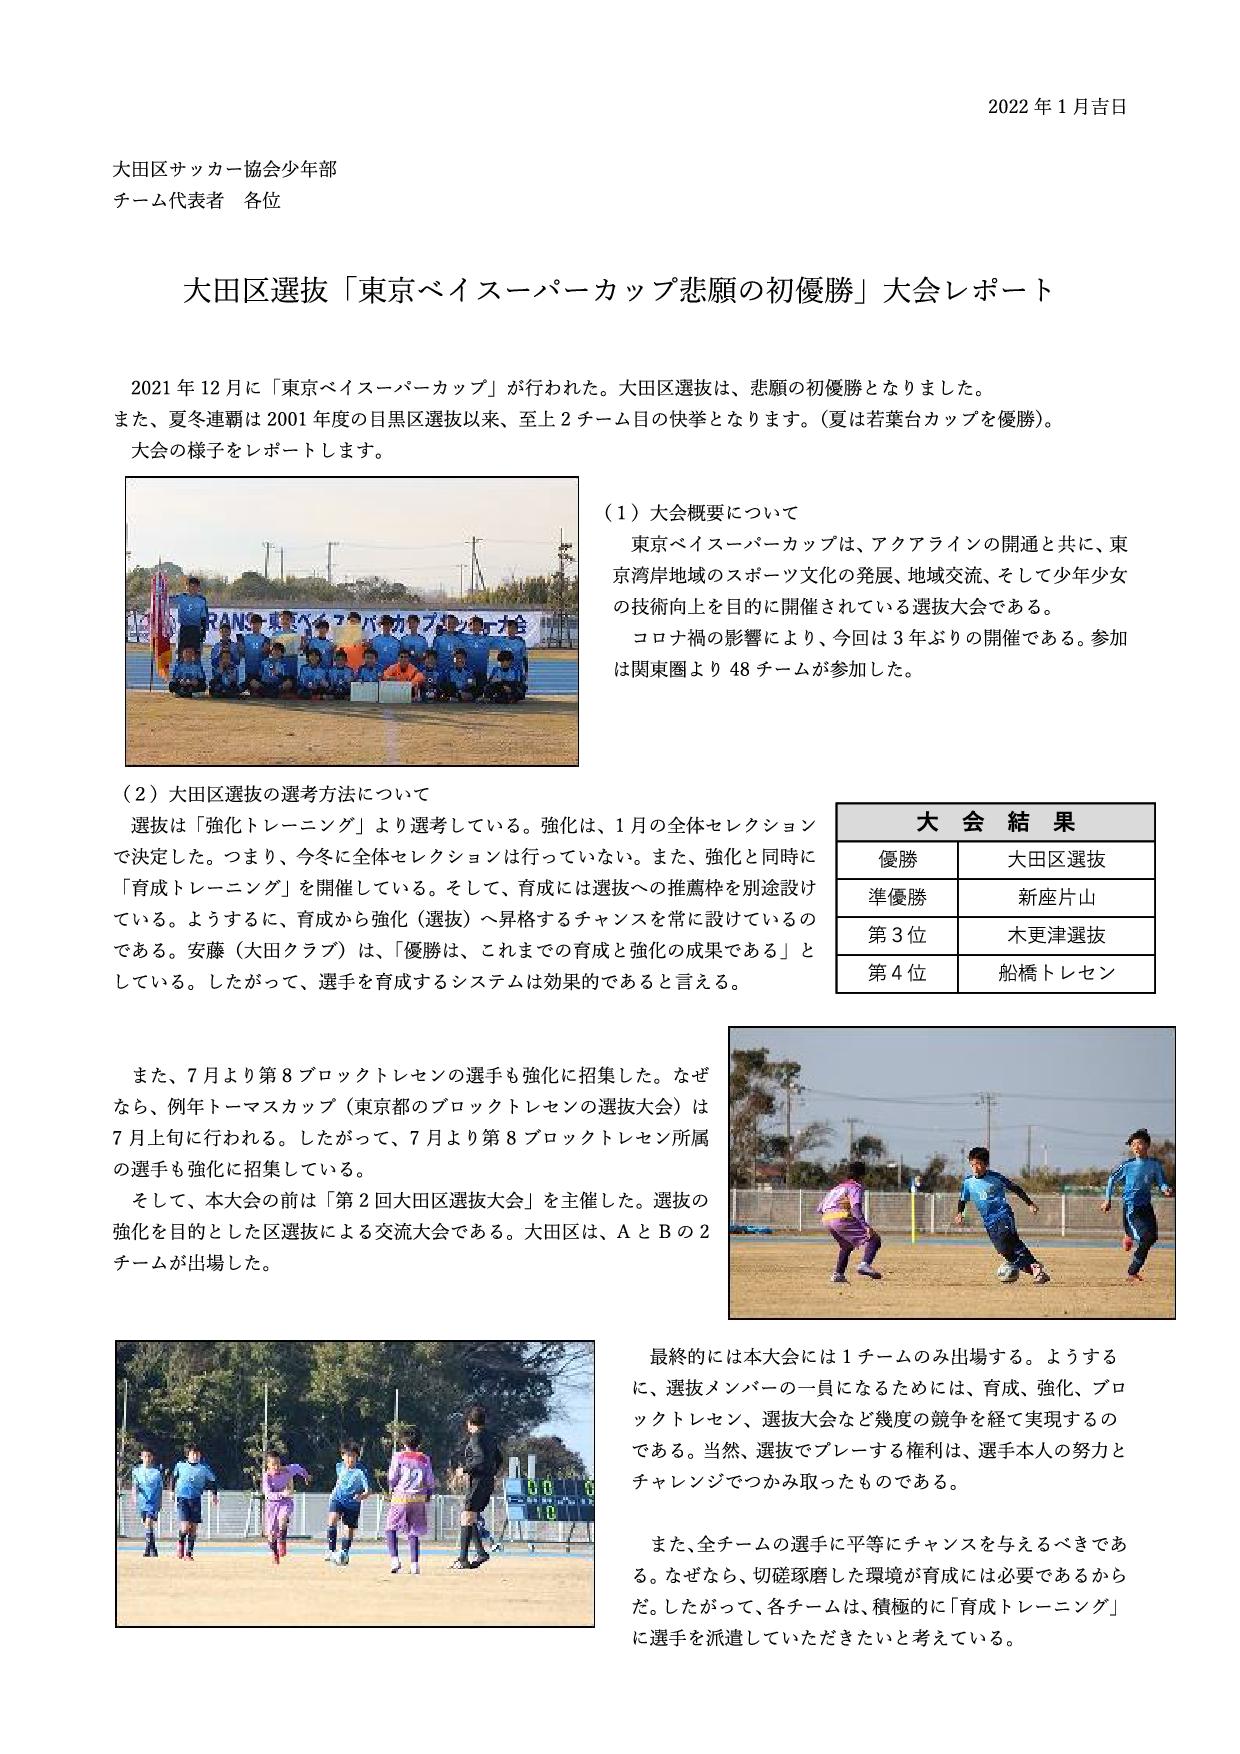 TOKYO BAY SUPER CUP レポート